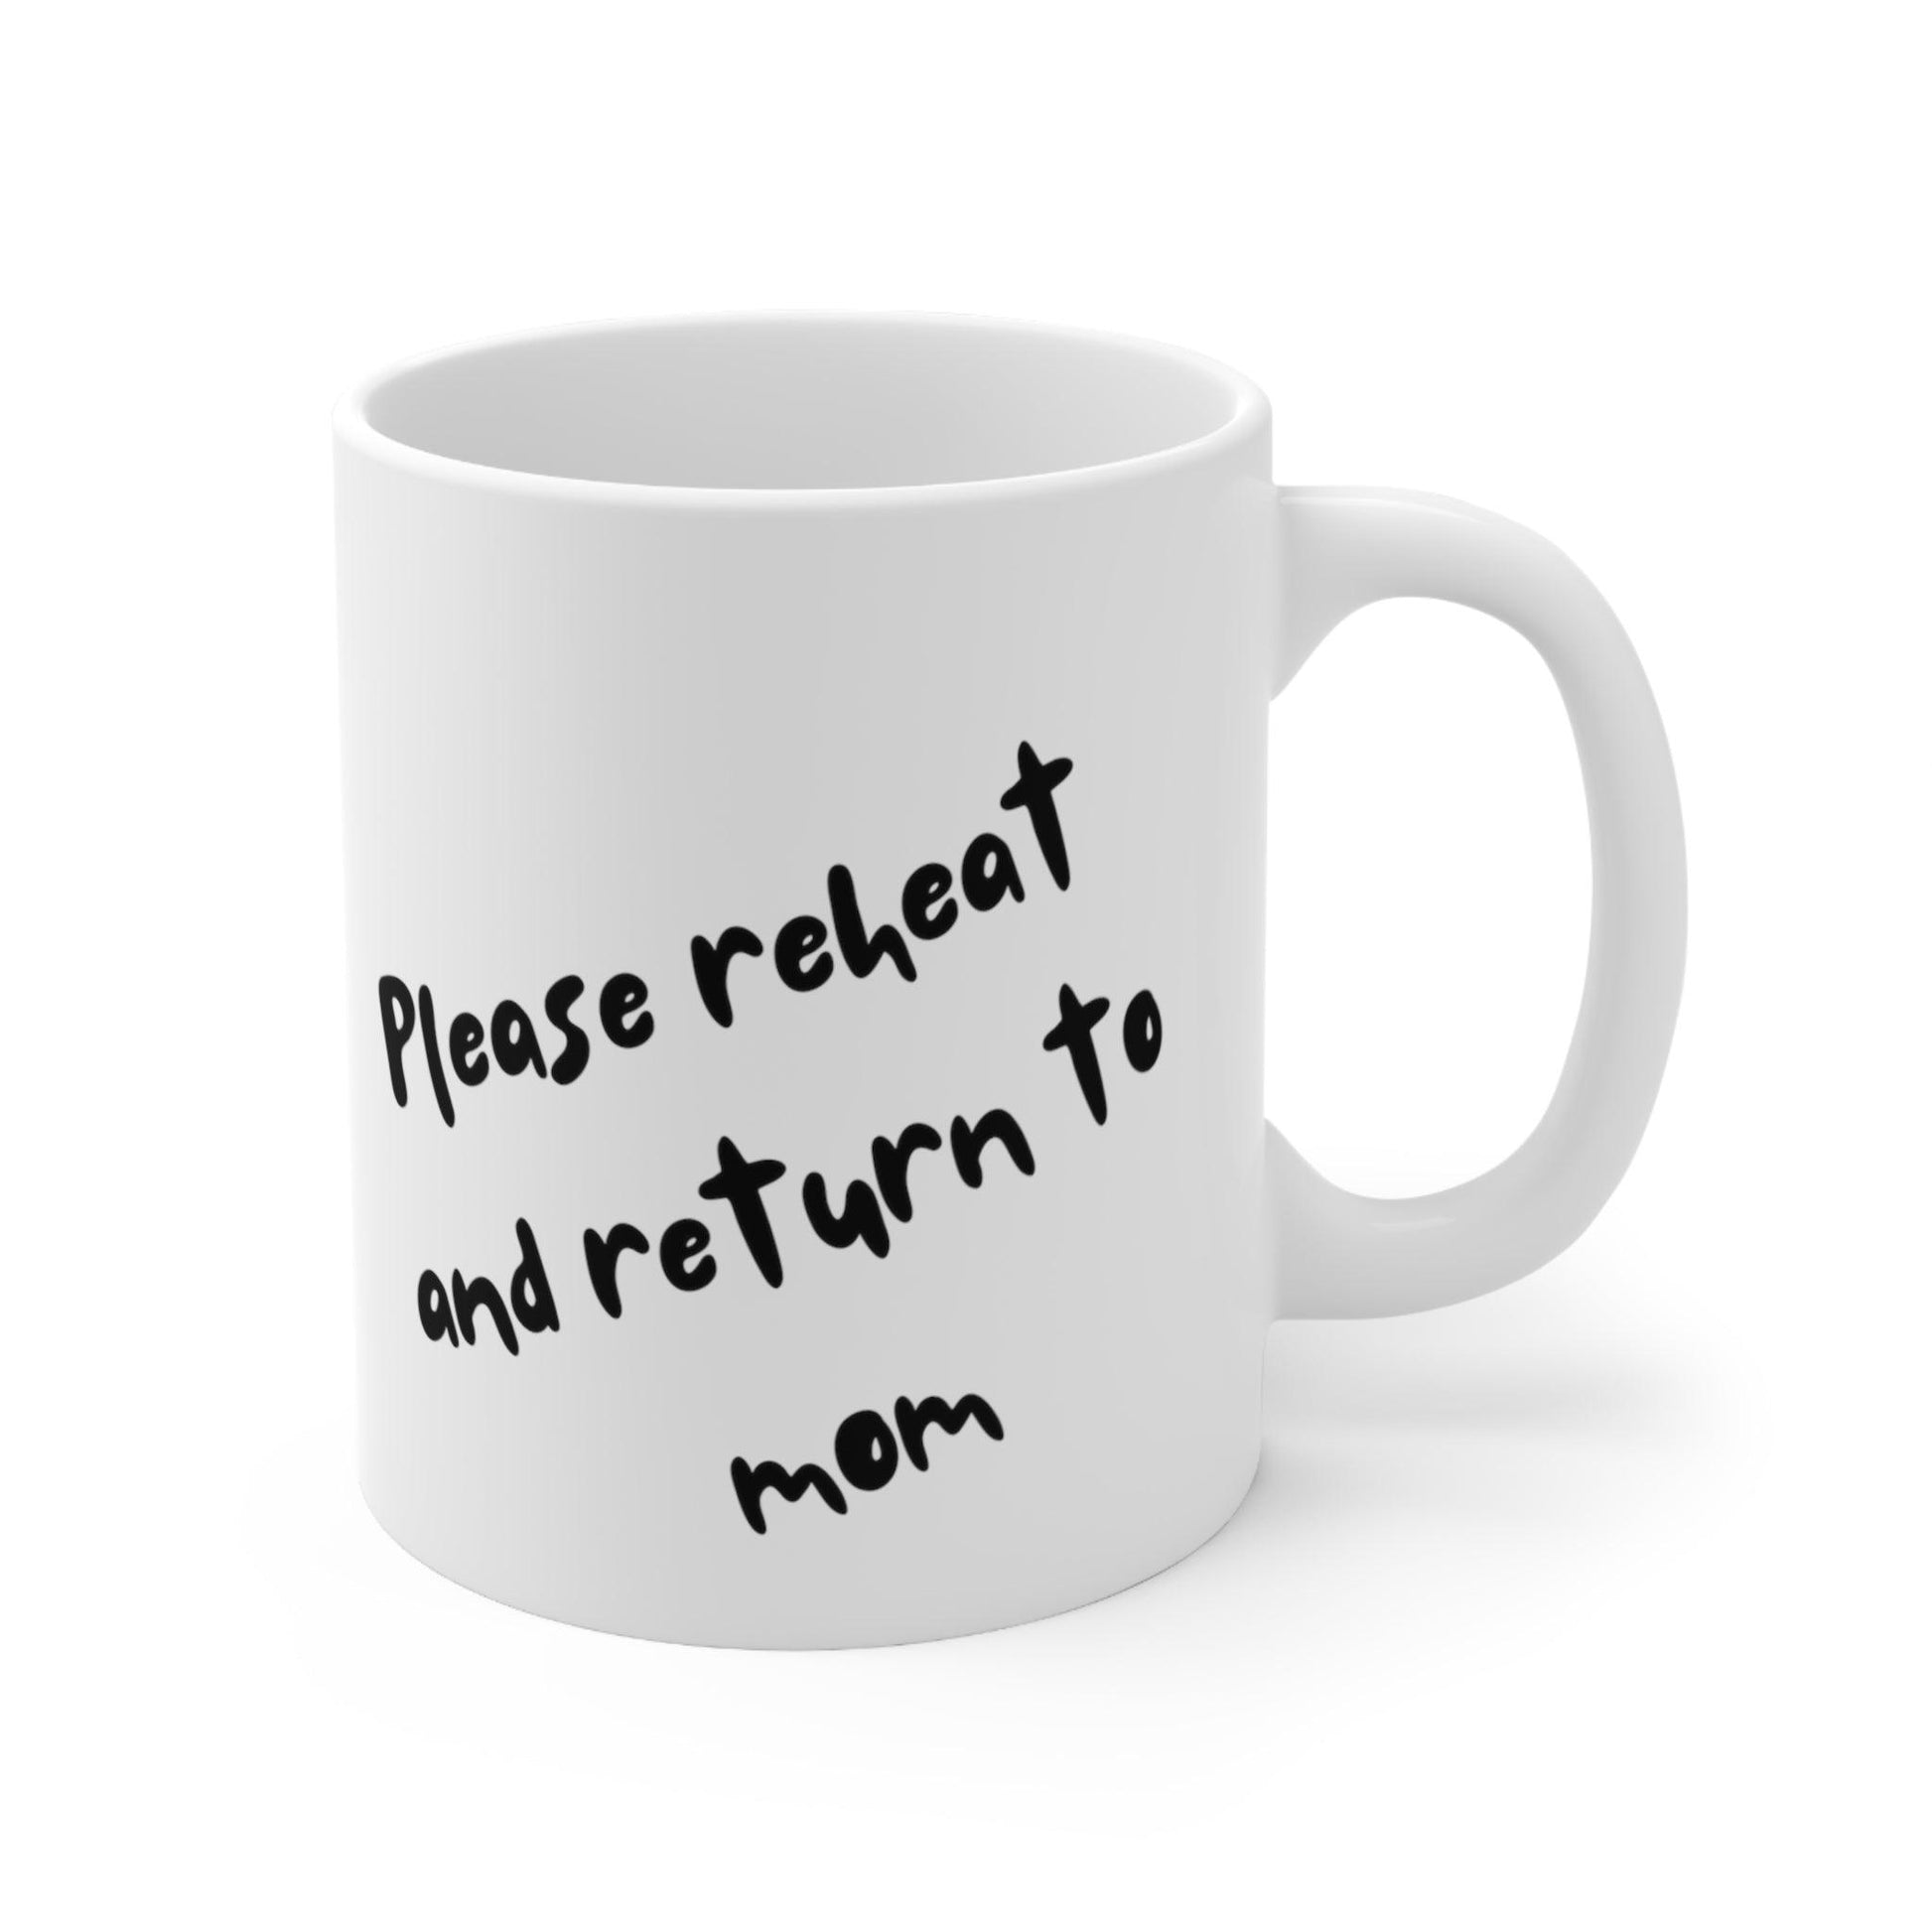 Reheat & Return Mom's Lifesaver Mug - Perfect for Busy Parents - Fidget and Focus